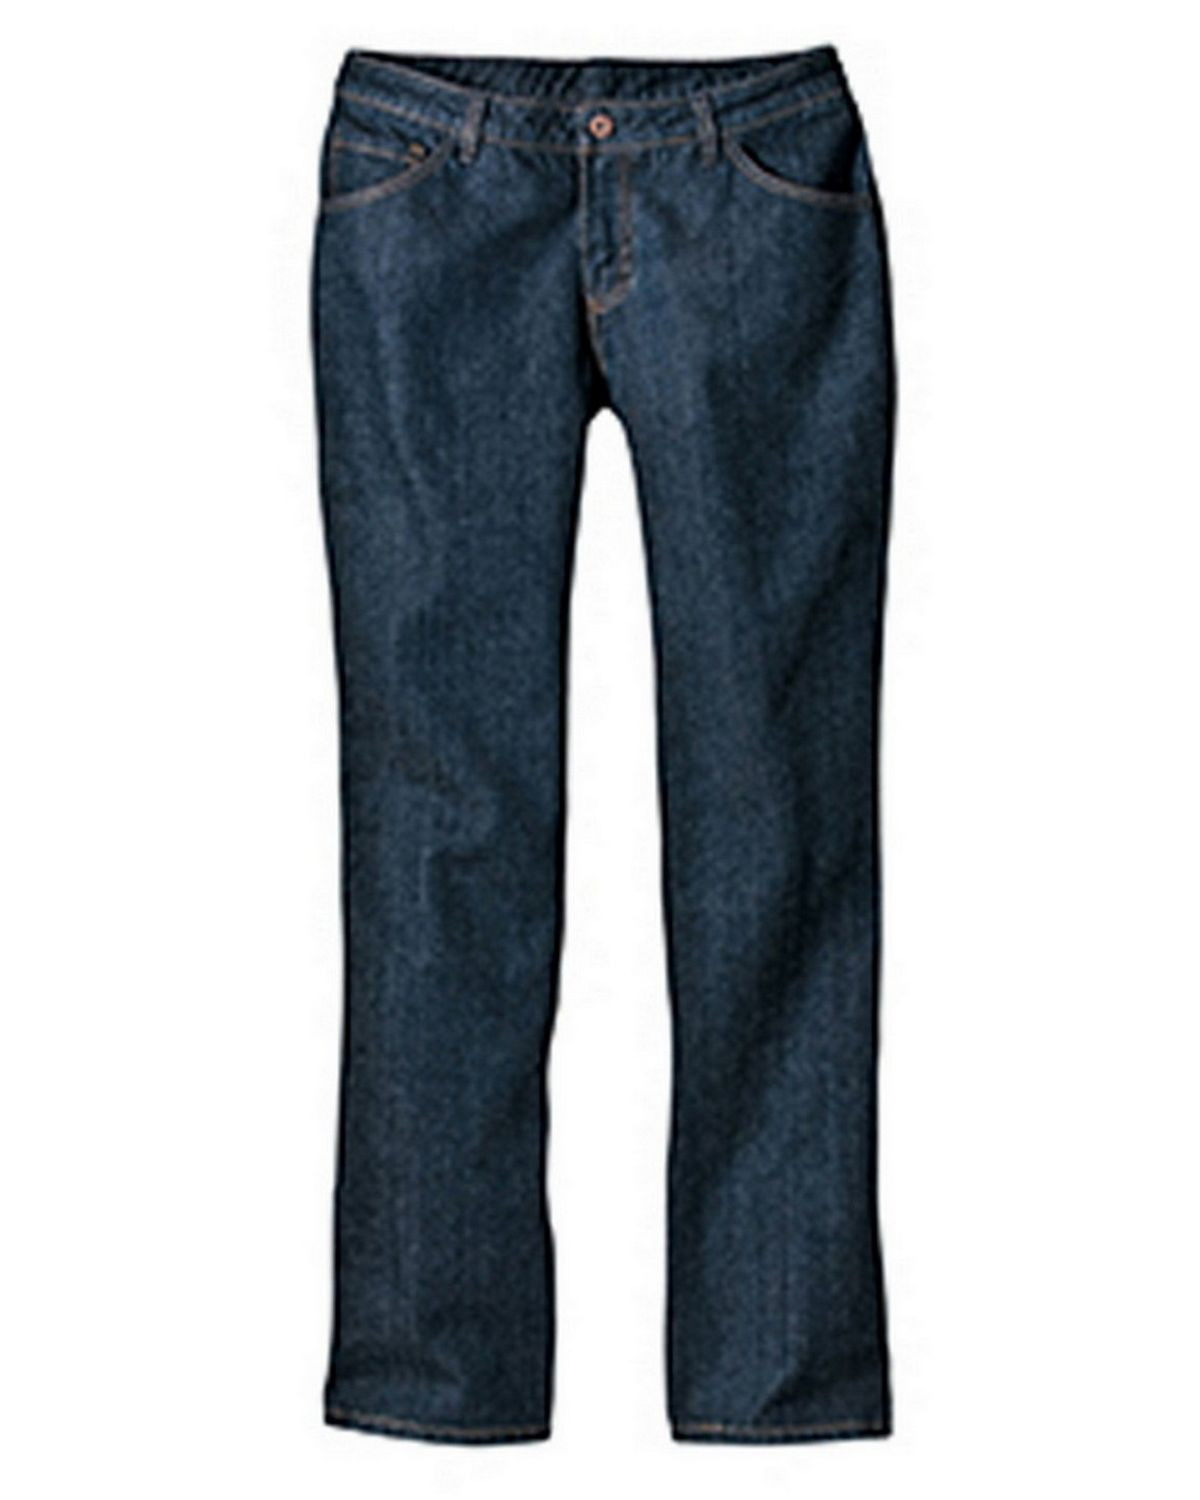 Dickies FD231 Women's Denim Five-Pocket Jean - Indigo Blue - 34T #denim